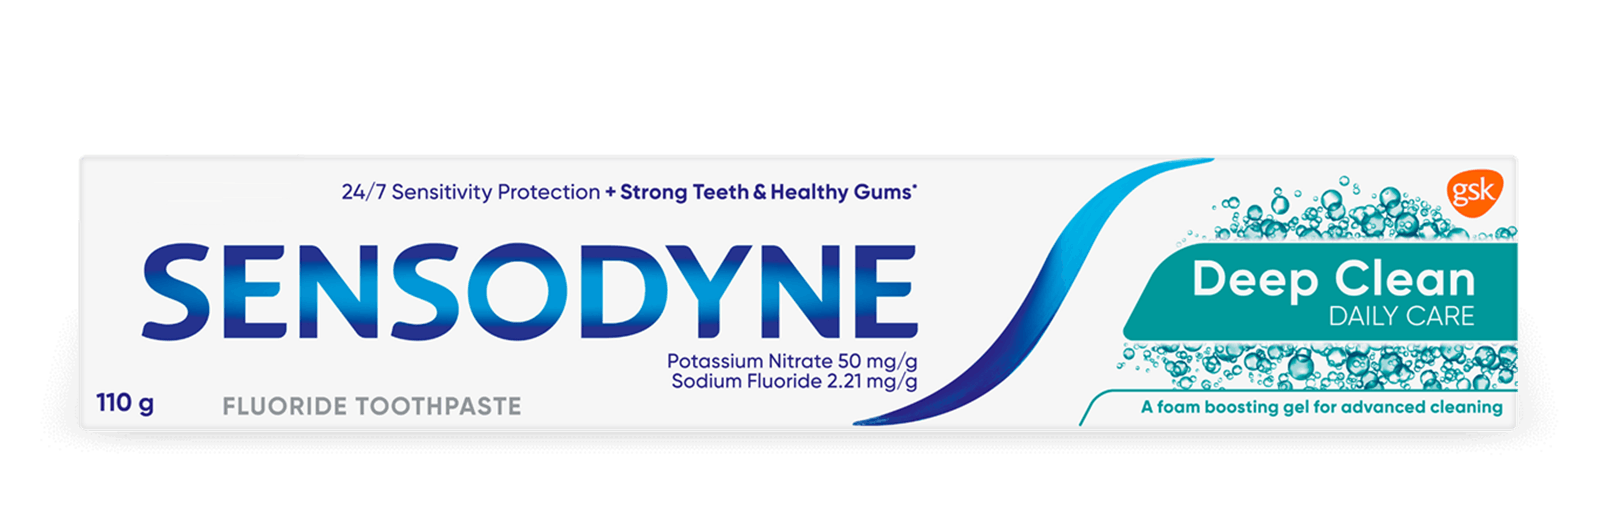 Sensodyne Deep Clean Toothpaste product image